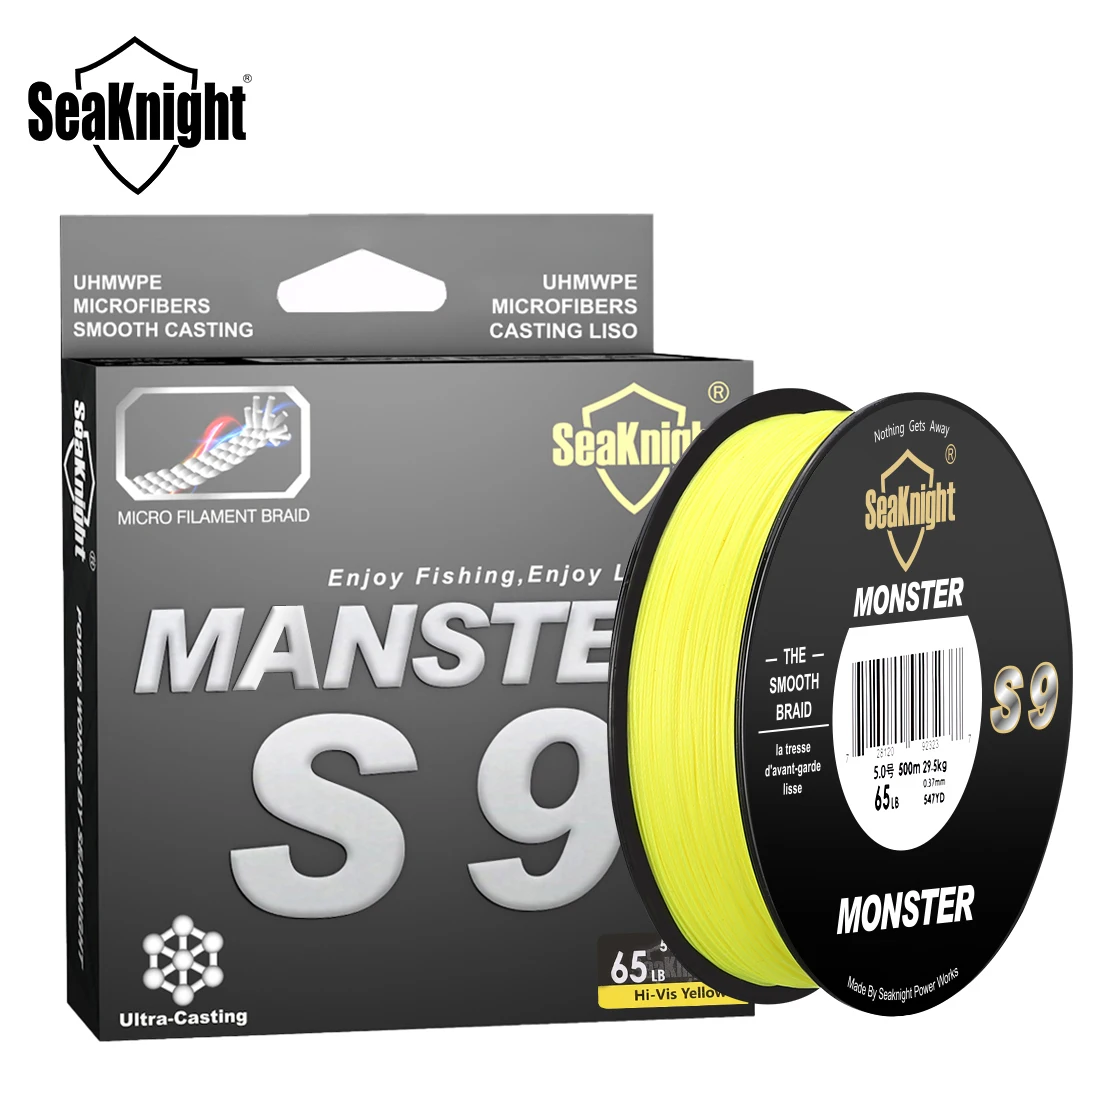 Seaknight Multifilament Fishing Line  Manster Multifilament Fishing Lines  - Brand S9 - Aliexpress